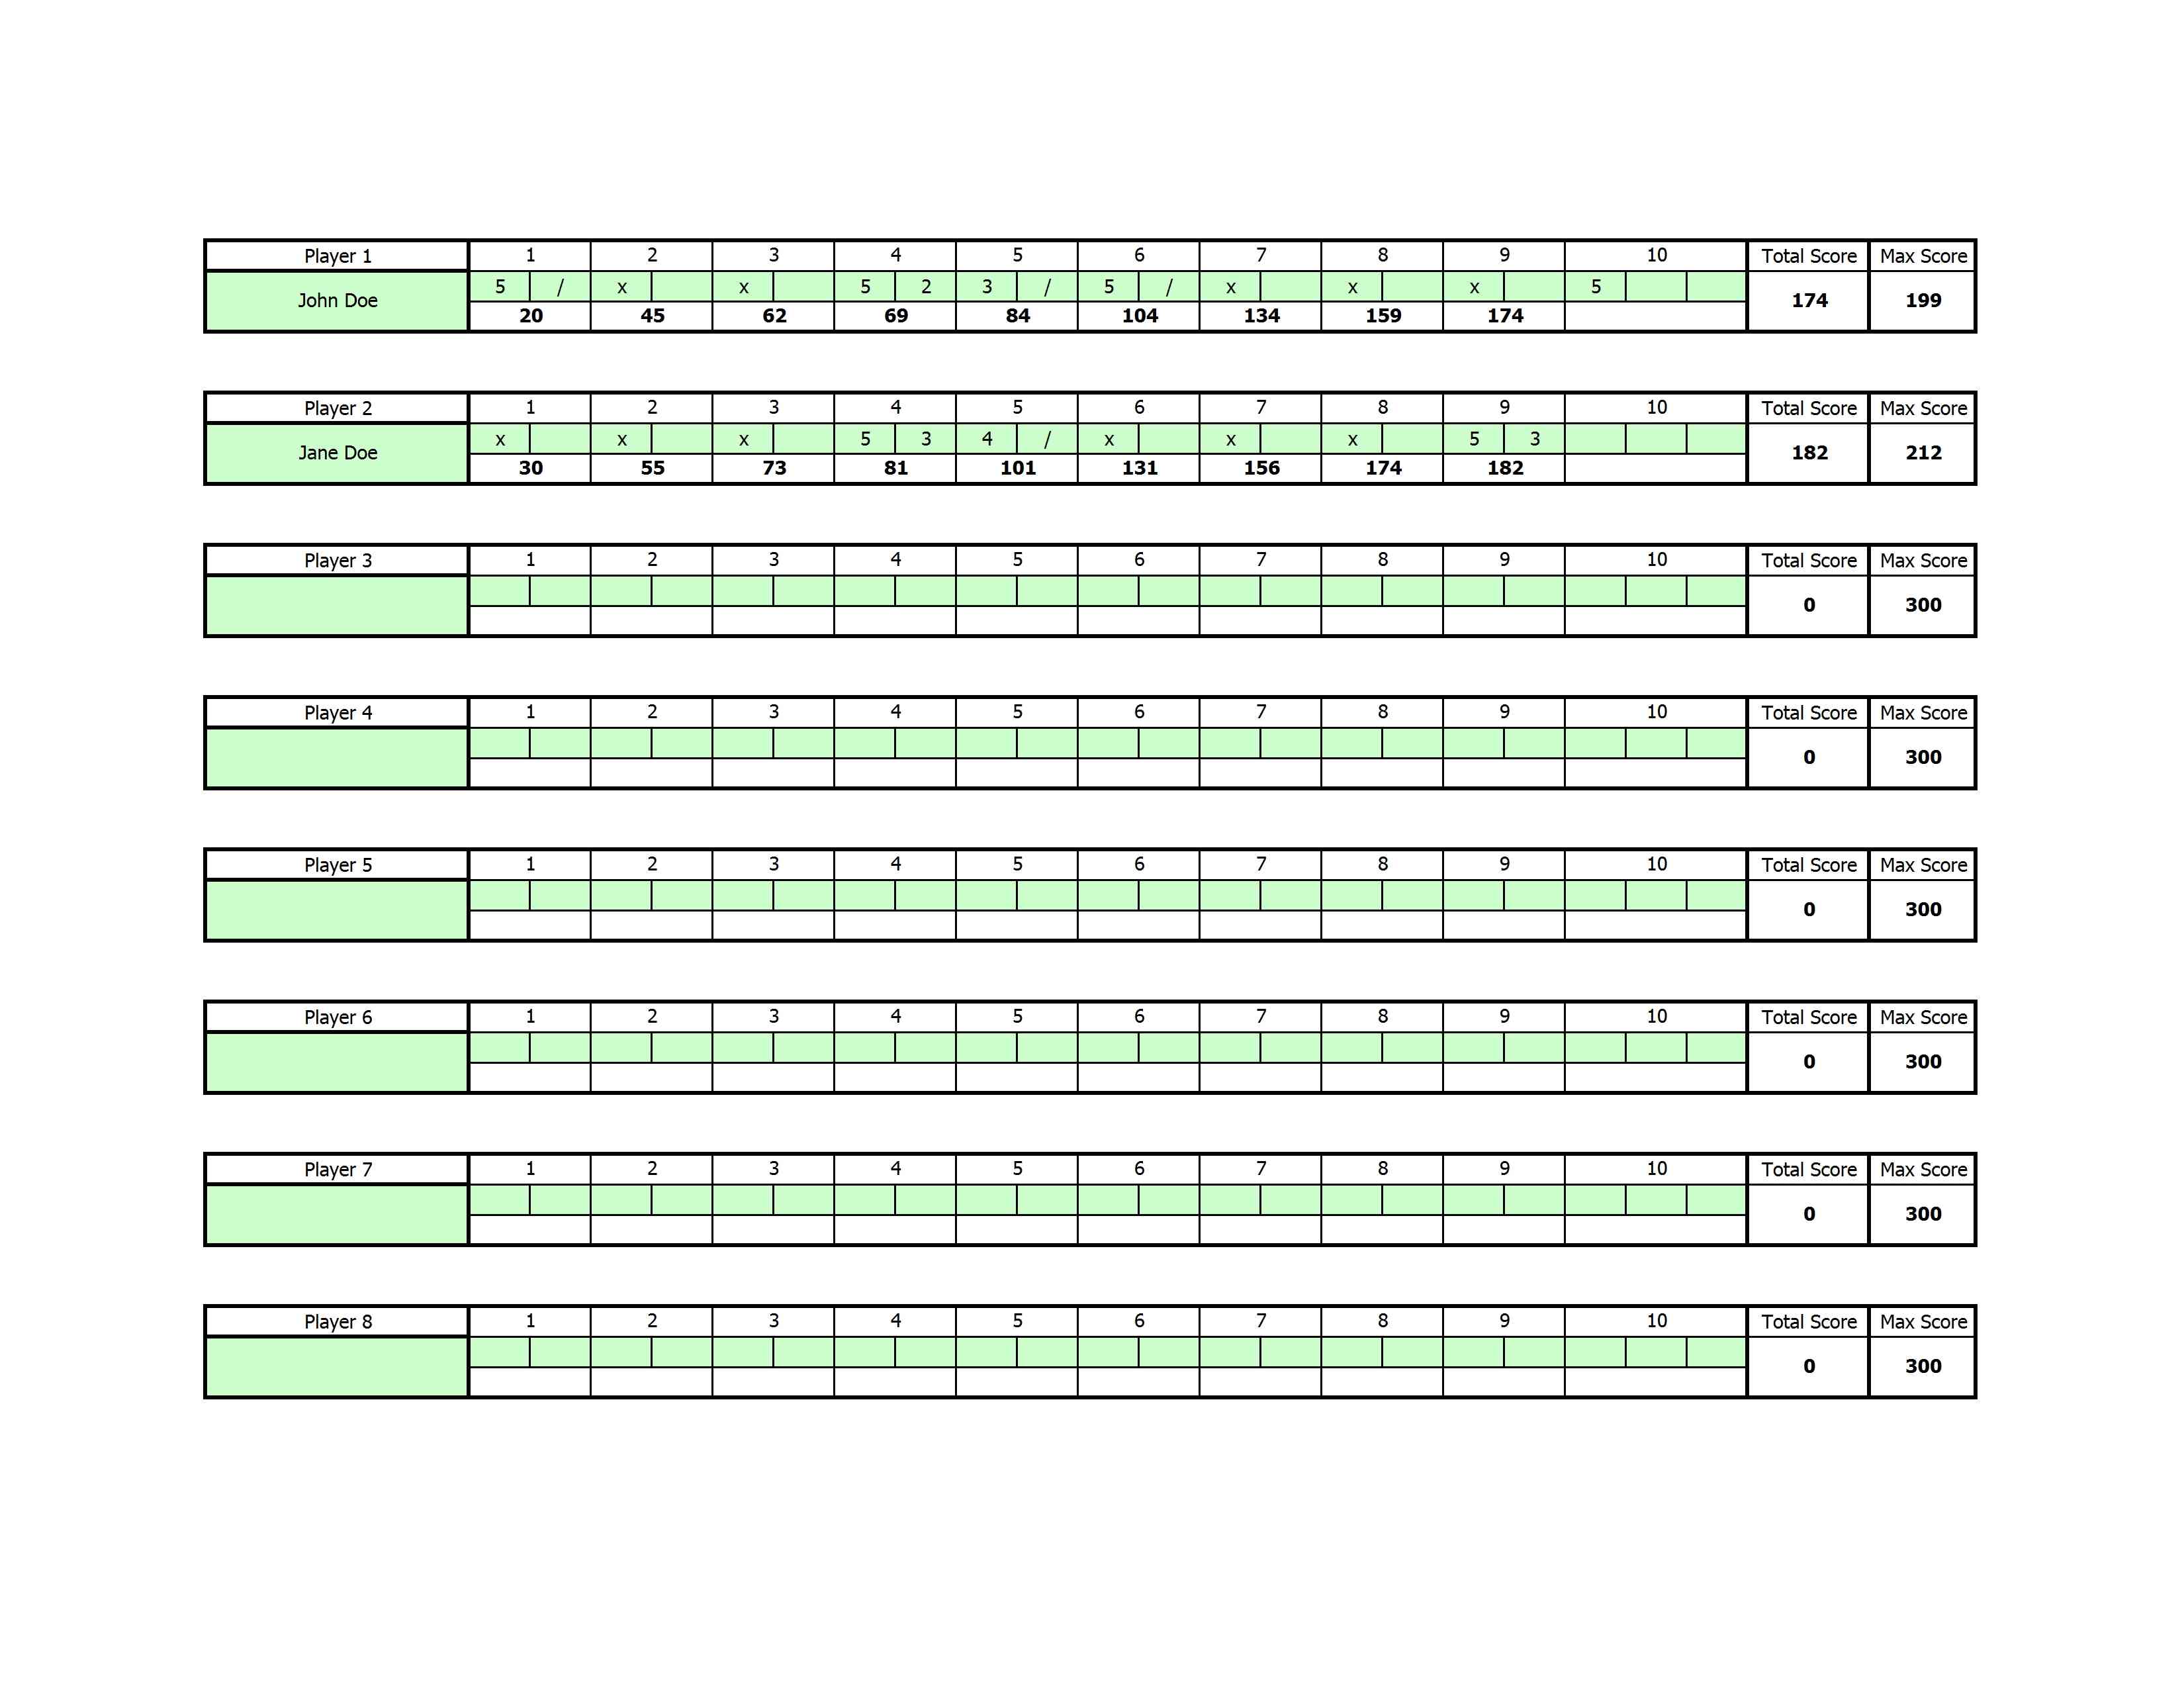 Blank Bowling Score Sheet